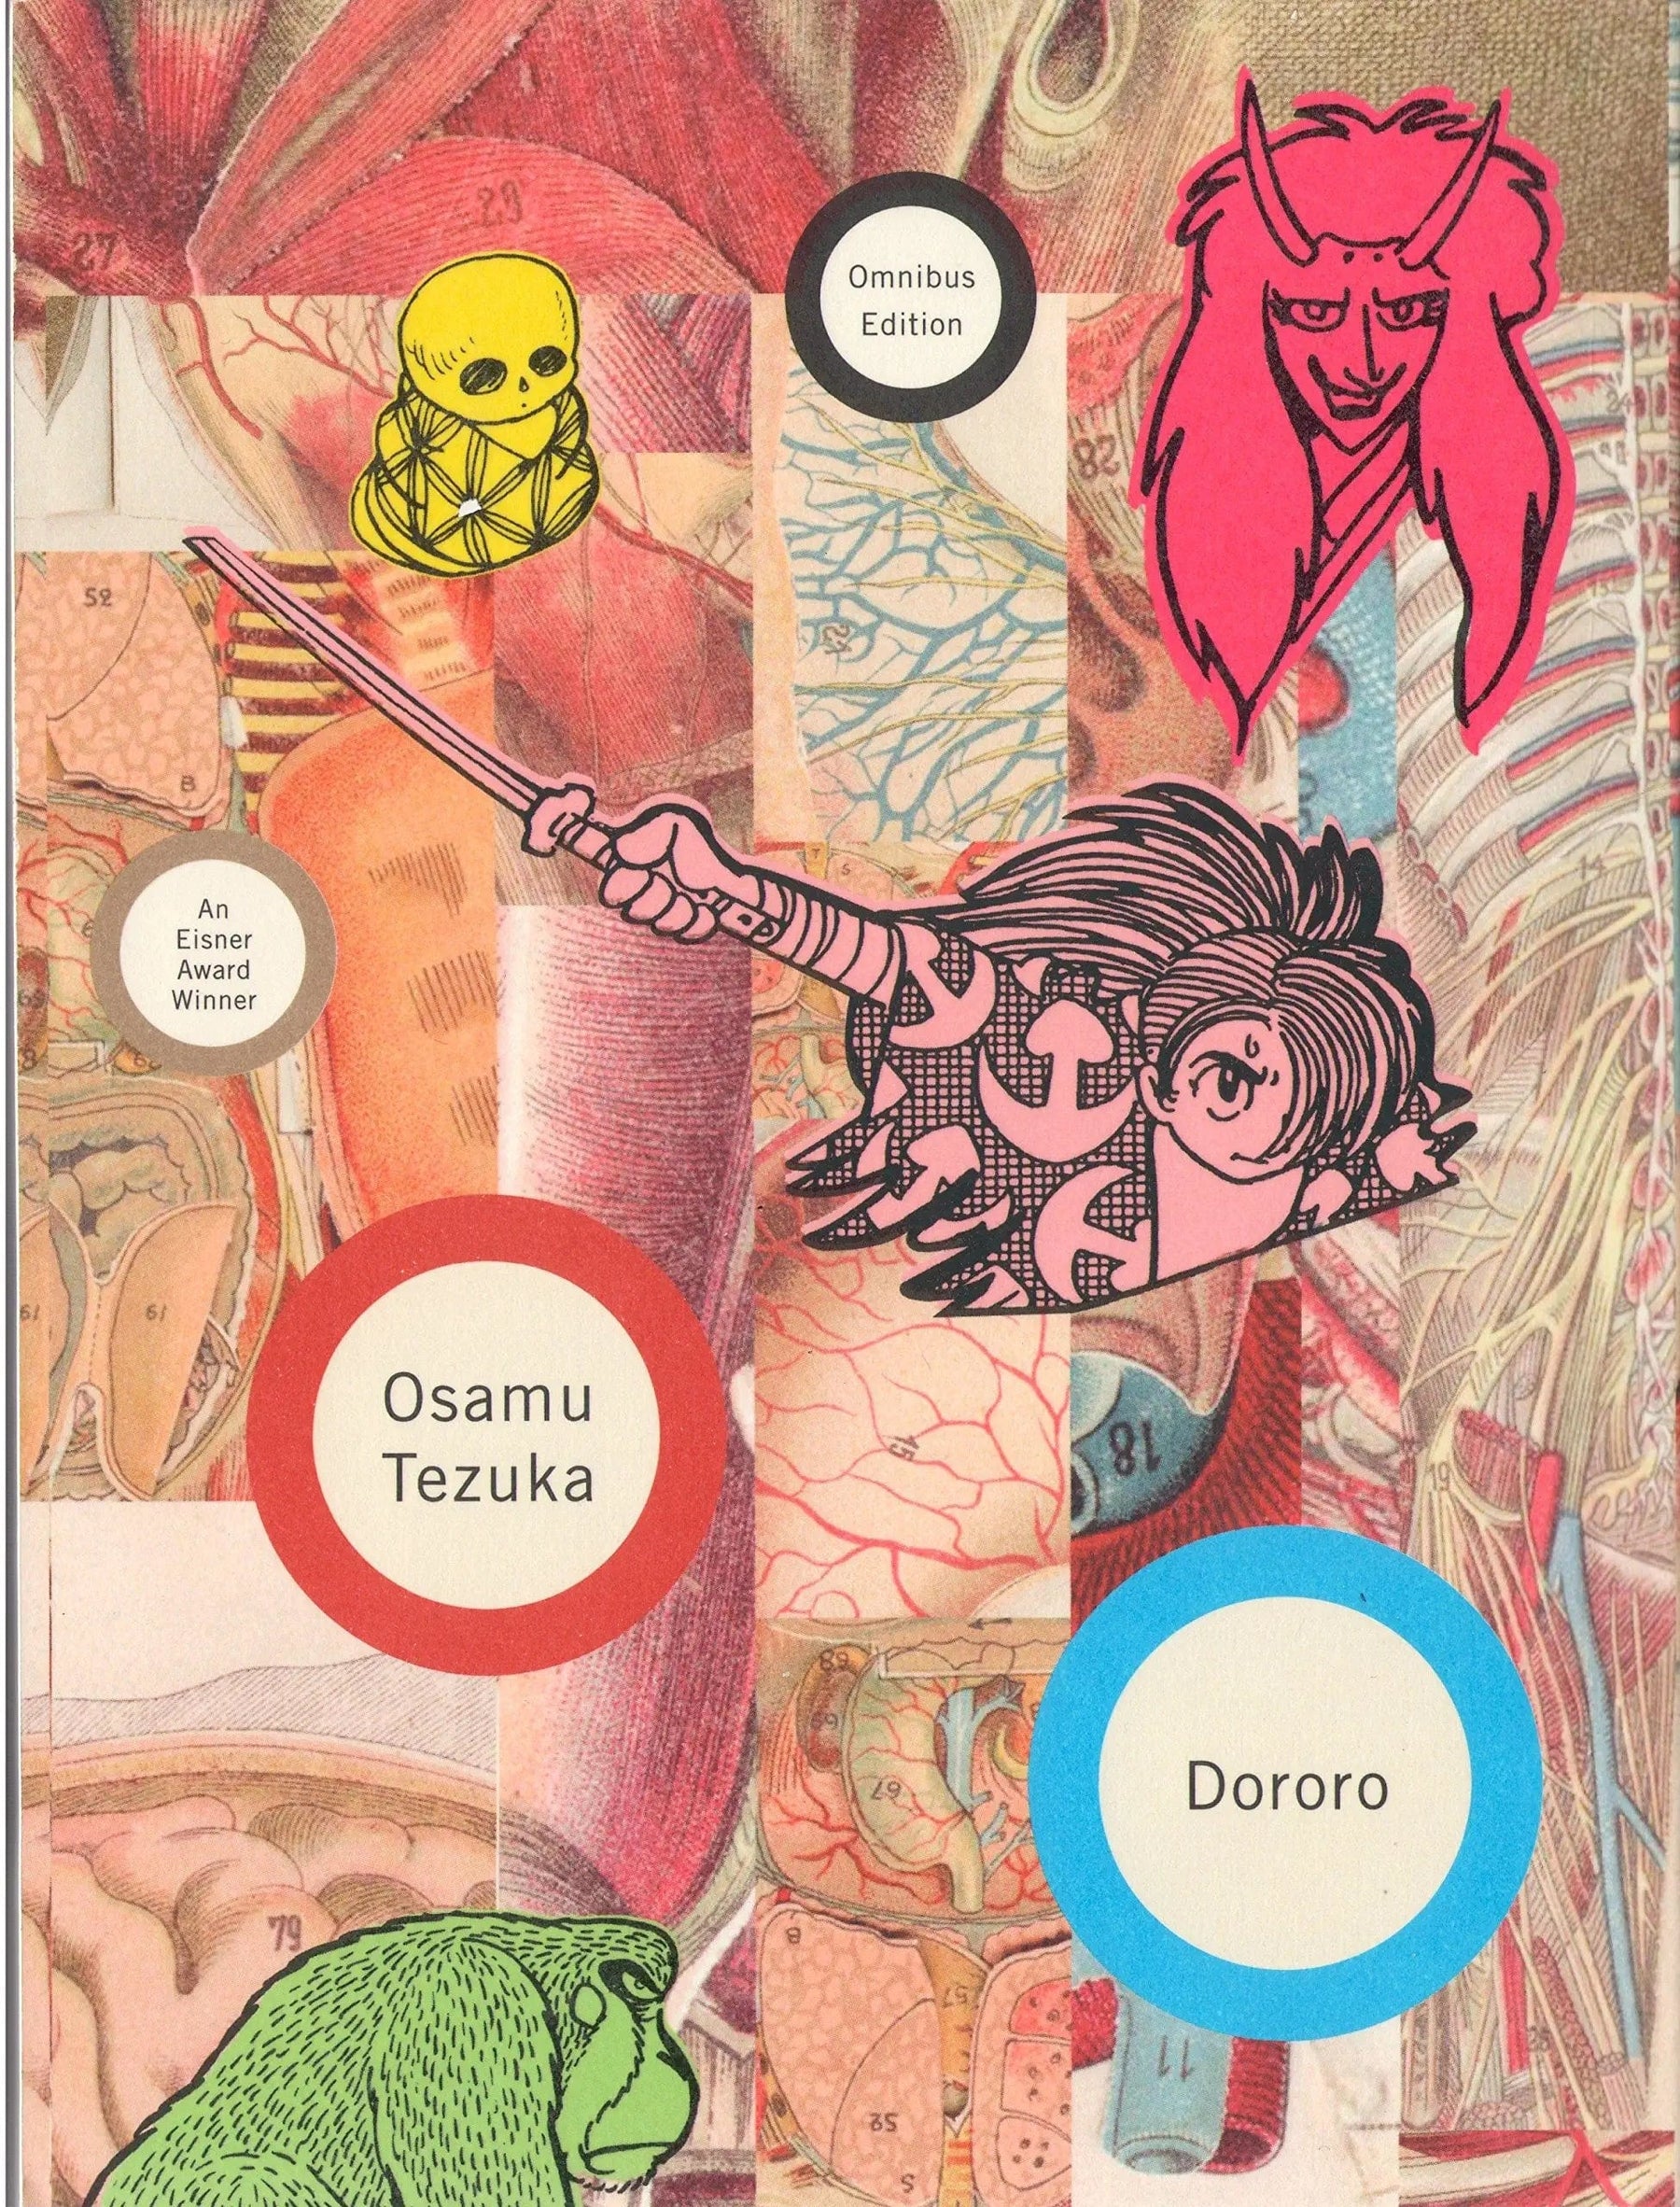 Dorro by Osamu Tezuka - Third Eye